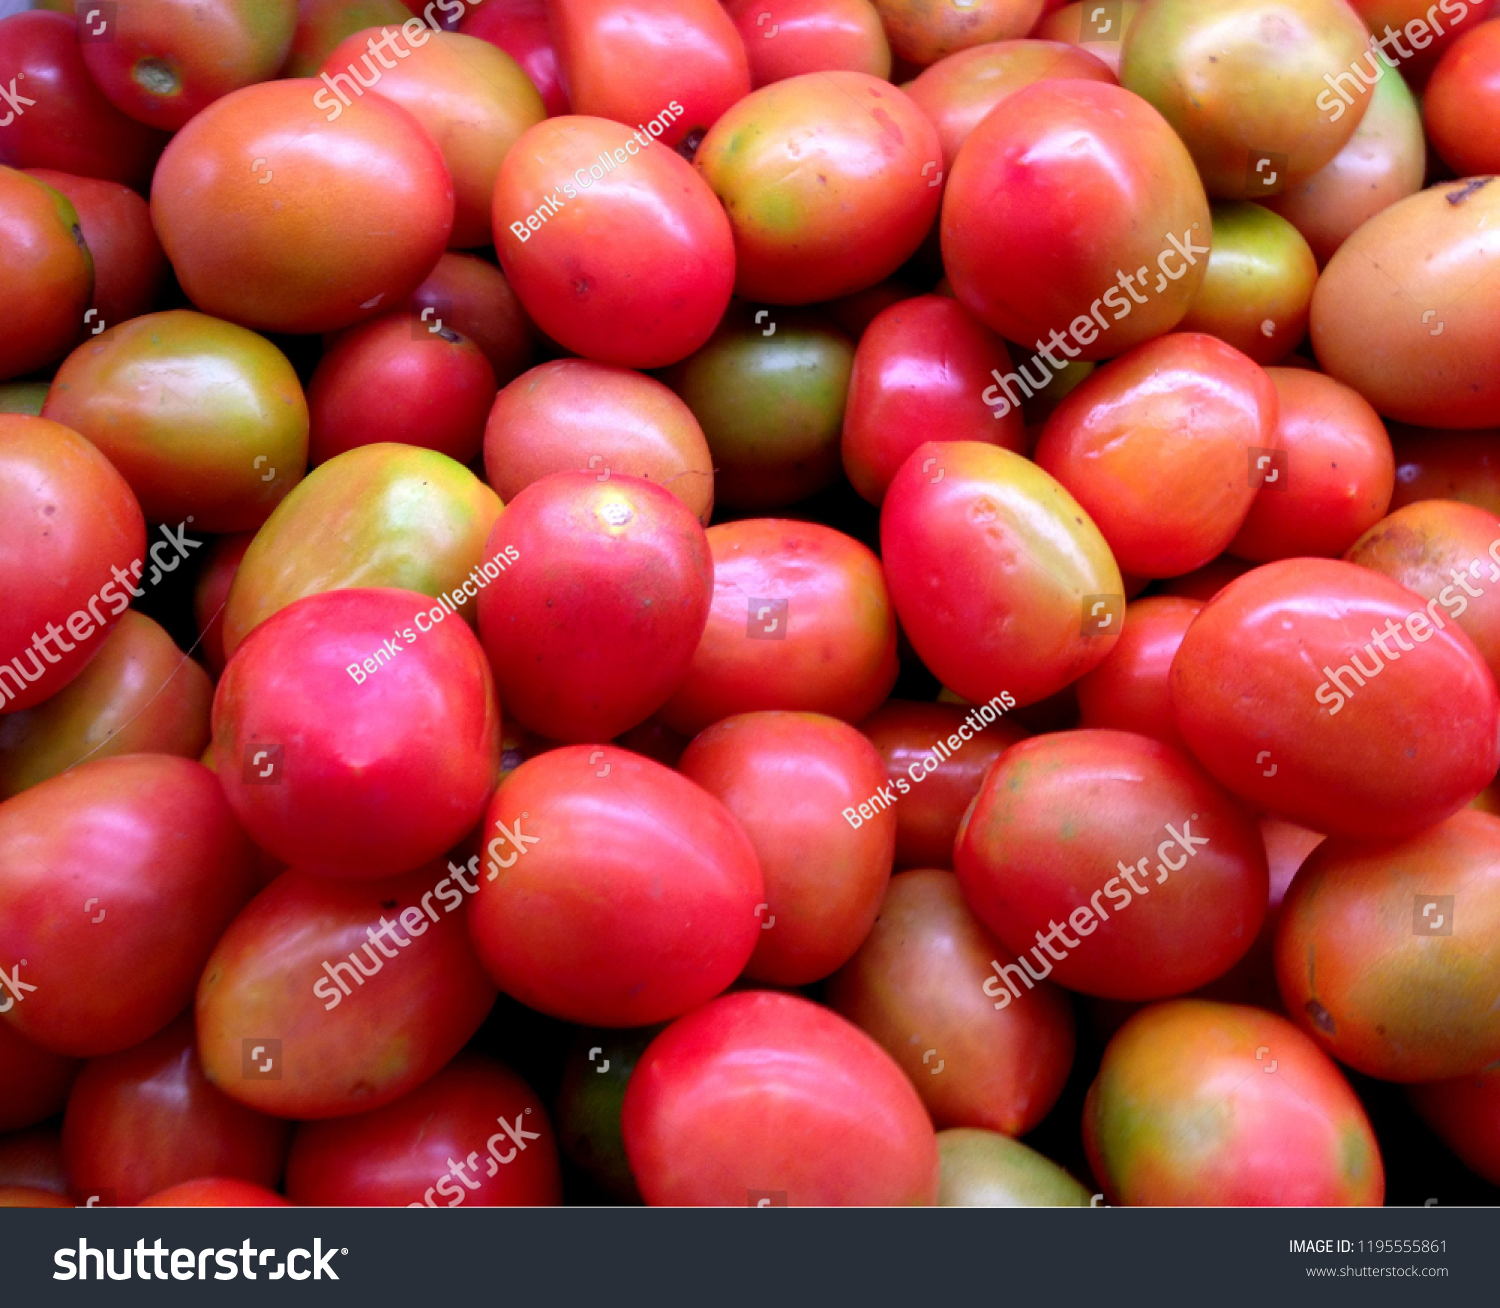 Fresh Look of Tomatos #1195555861